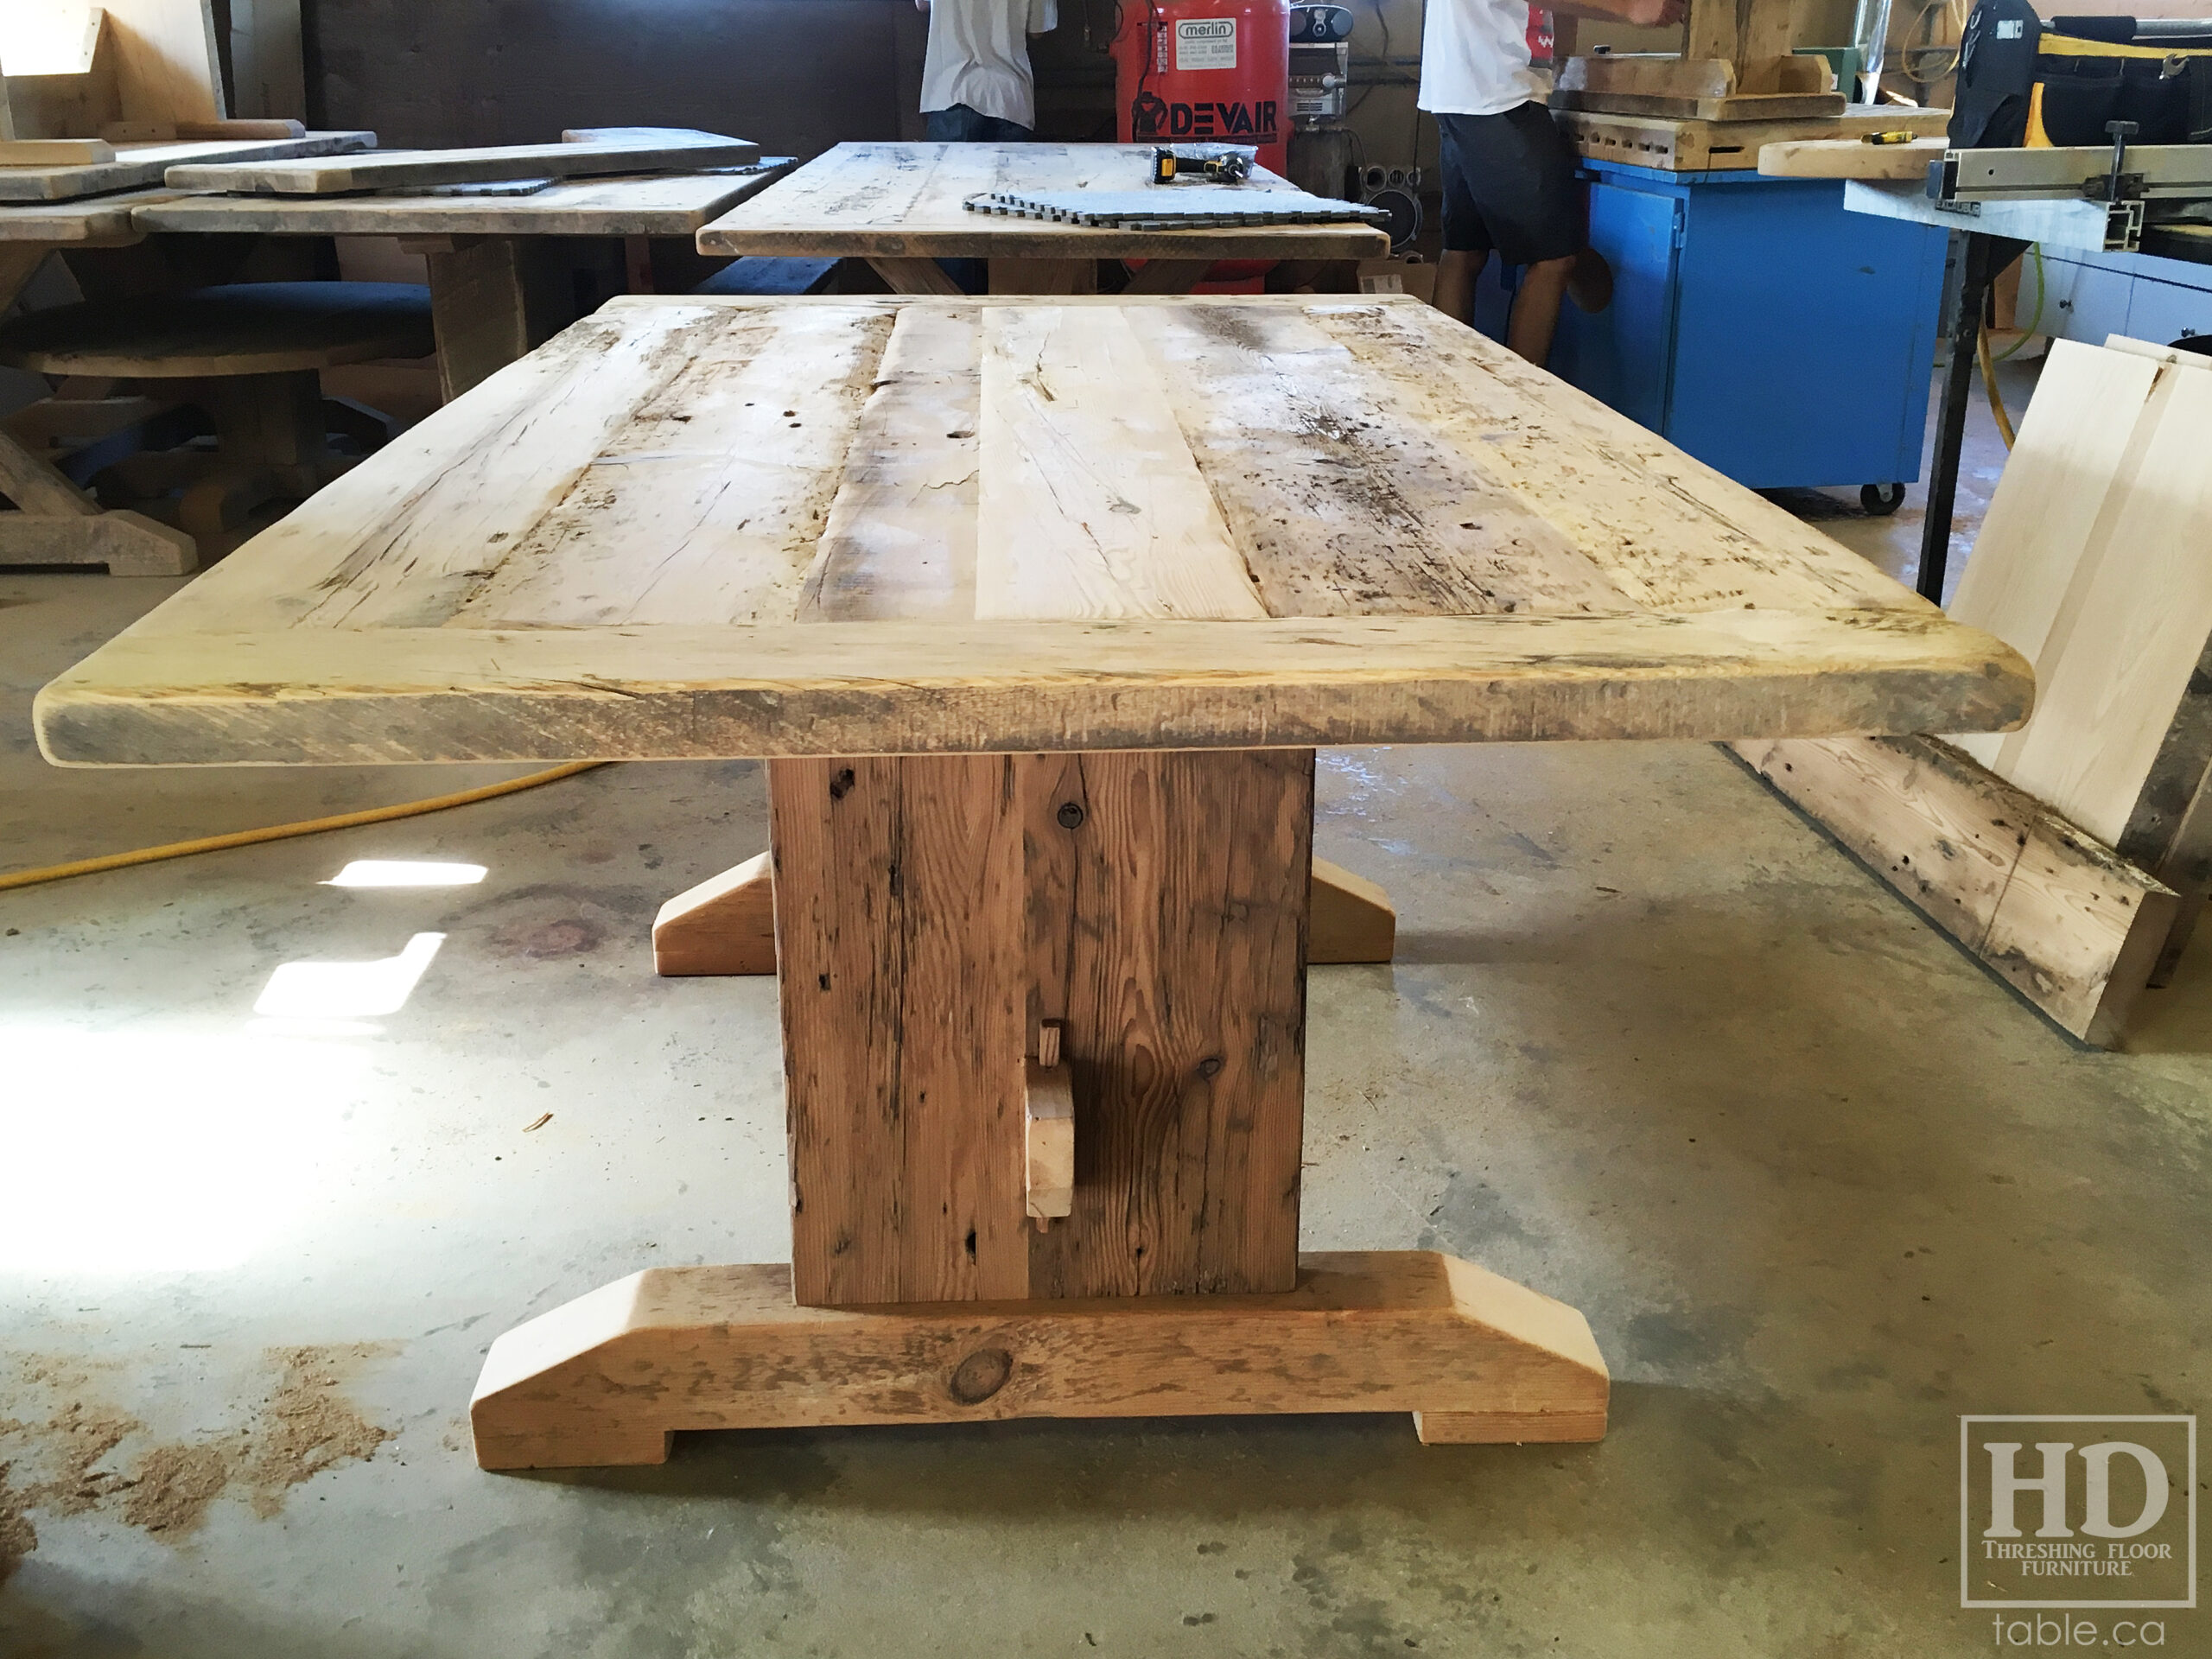 Reclaimed Wood Trestle Table by HD Threshing Floor Furniture / www.table.ca